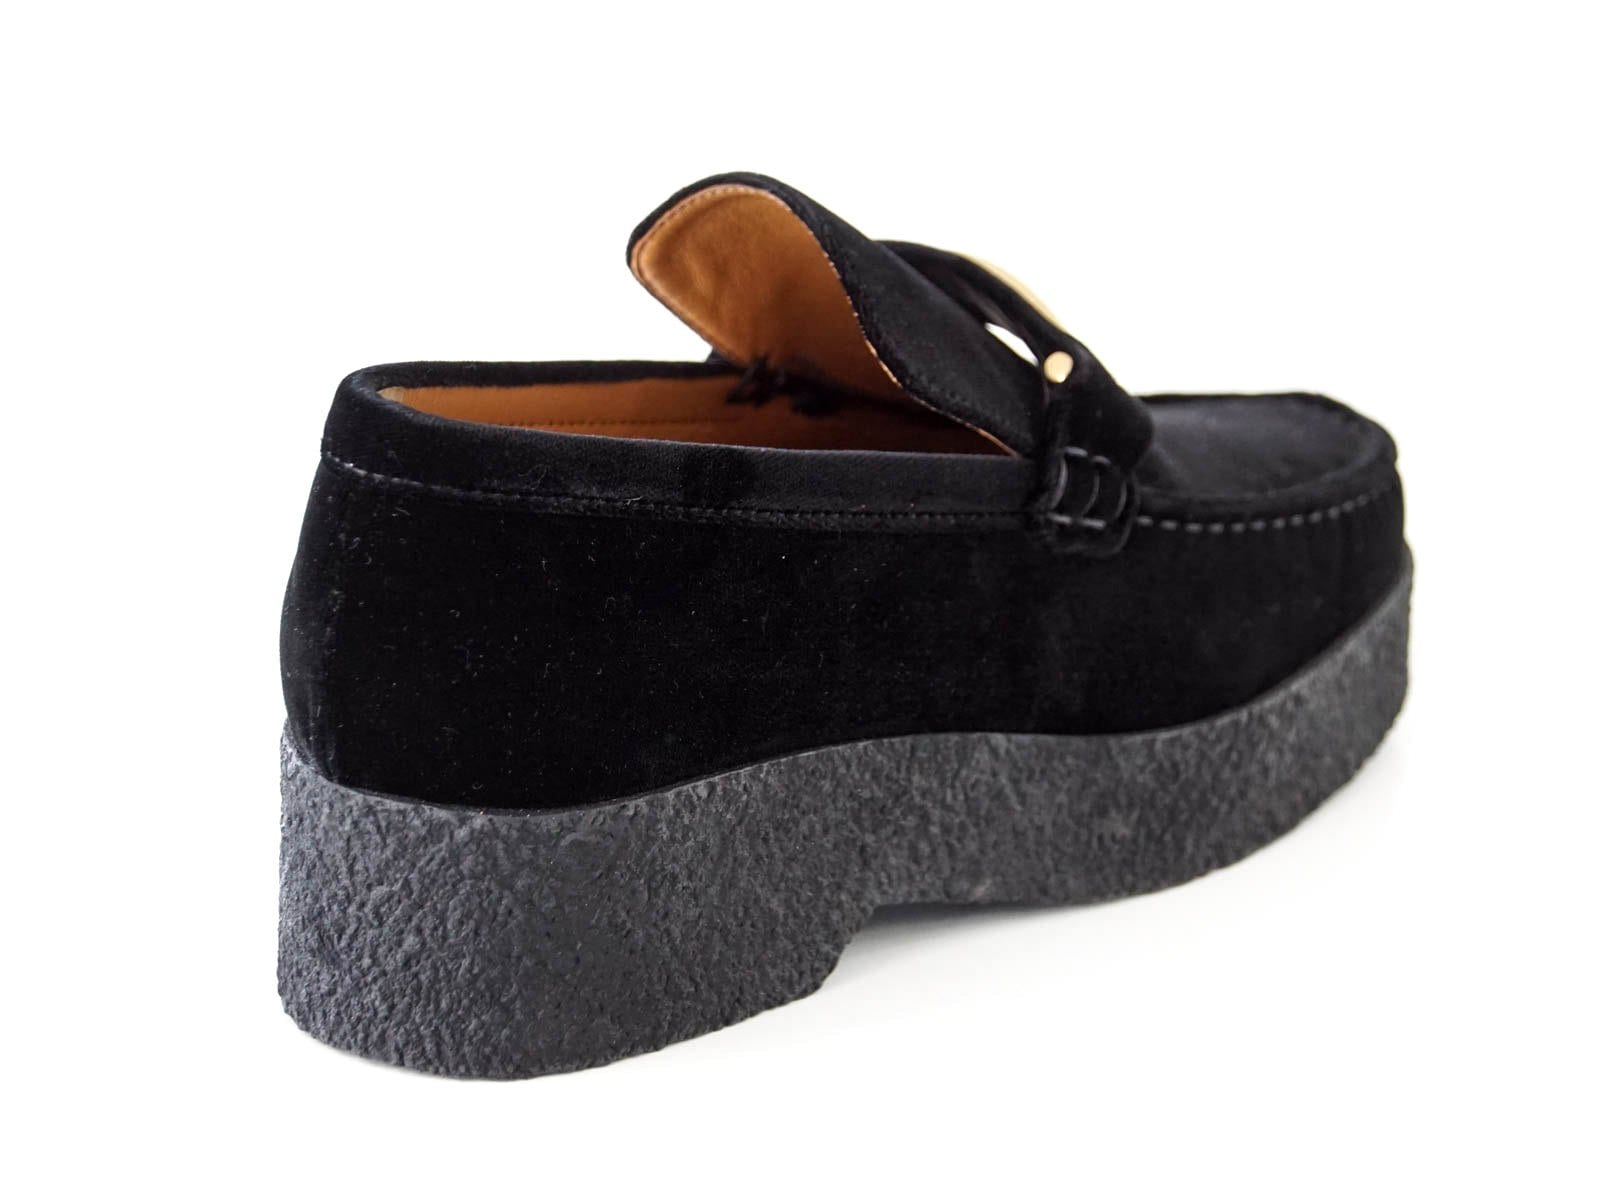 Celine Shoe Sleek Black Velvet Platform Loafer 39 / 9 New - mightychic